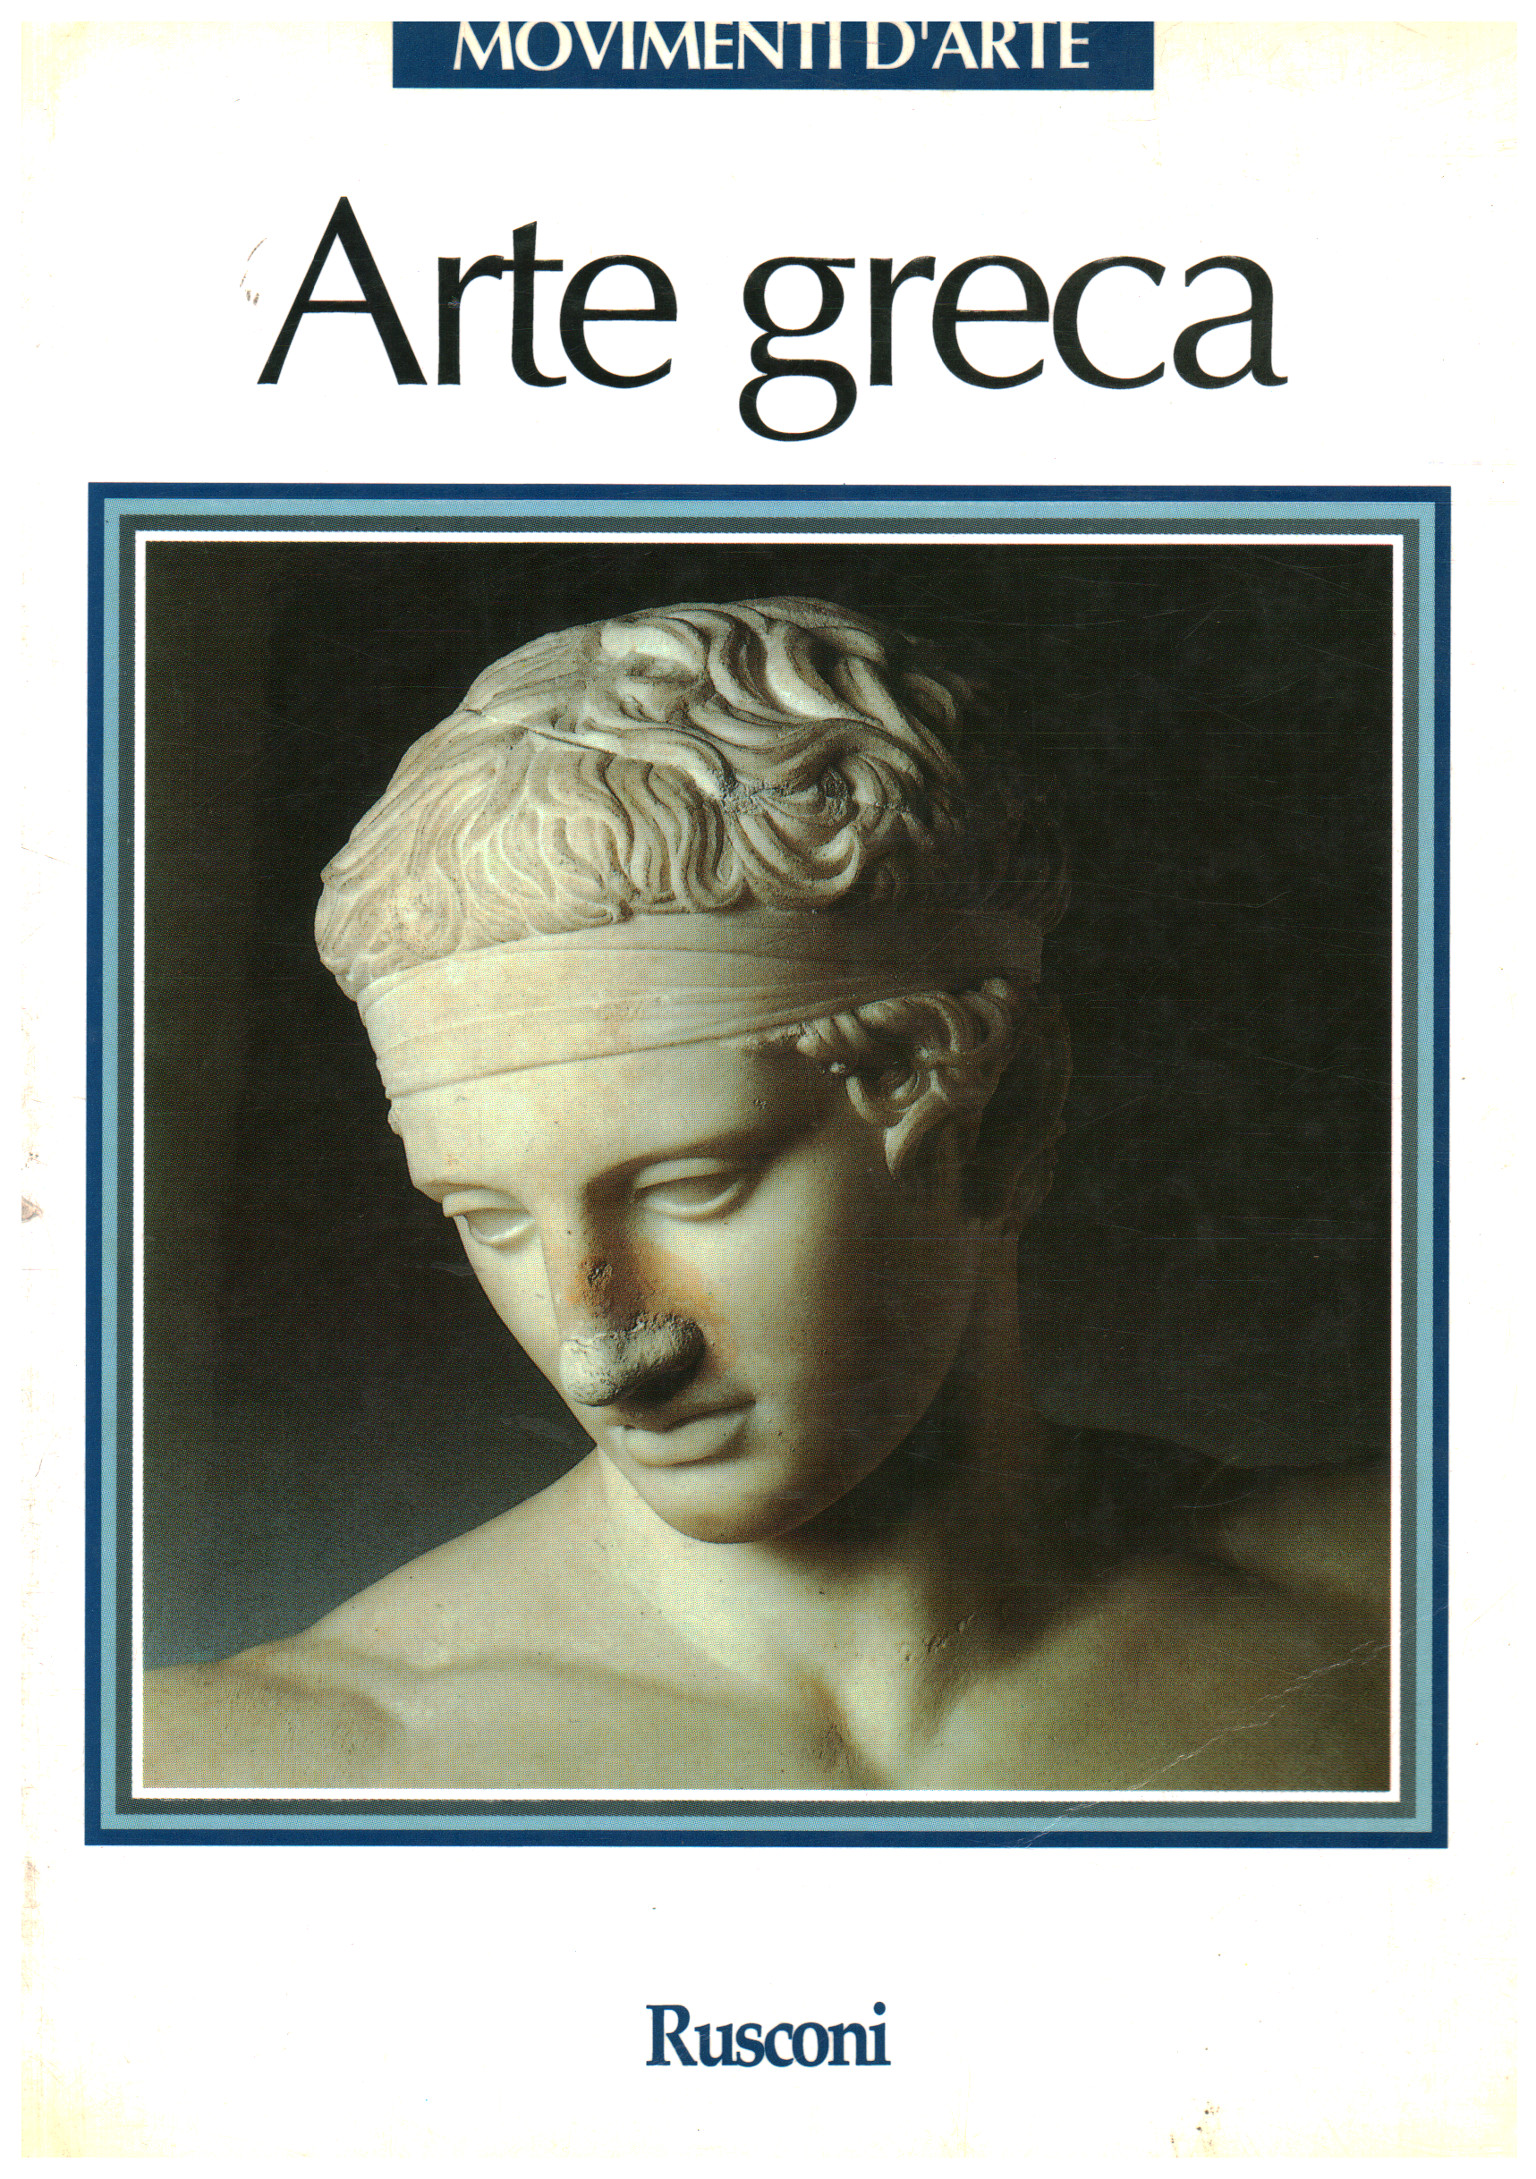 Greek art